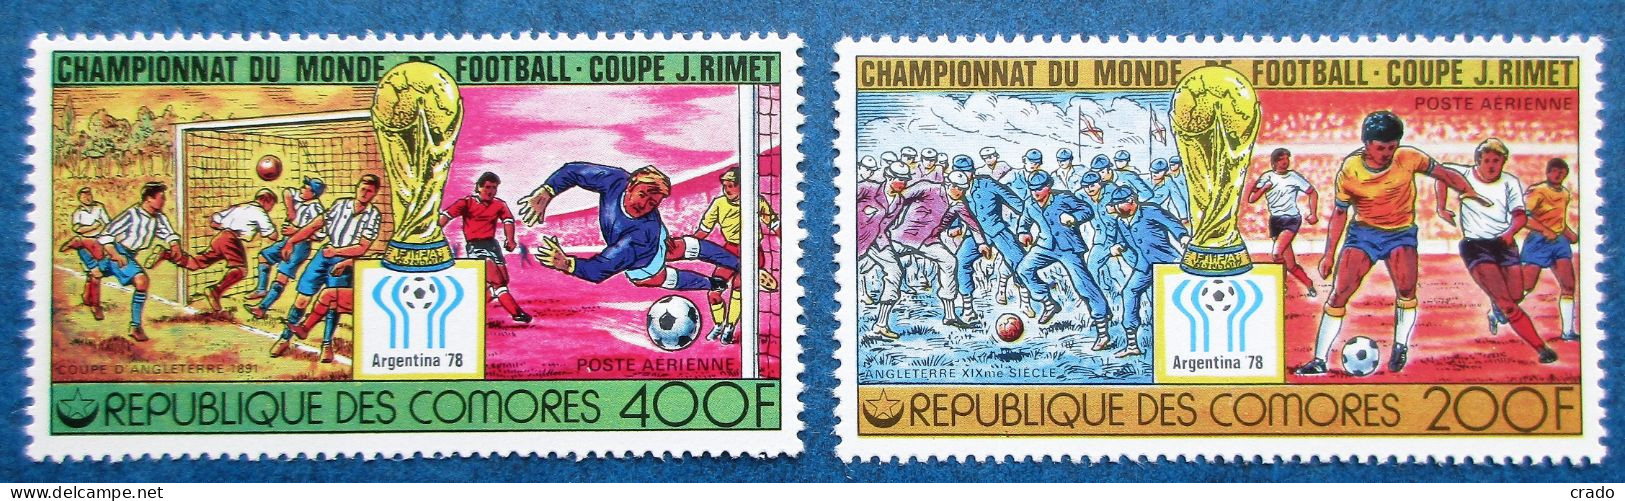 Ensemble Philatélique Des Comores Neuf** De 1978 Thème Football - Comores (1975-...)